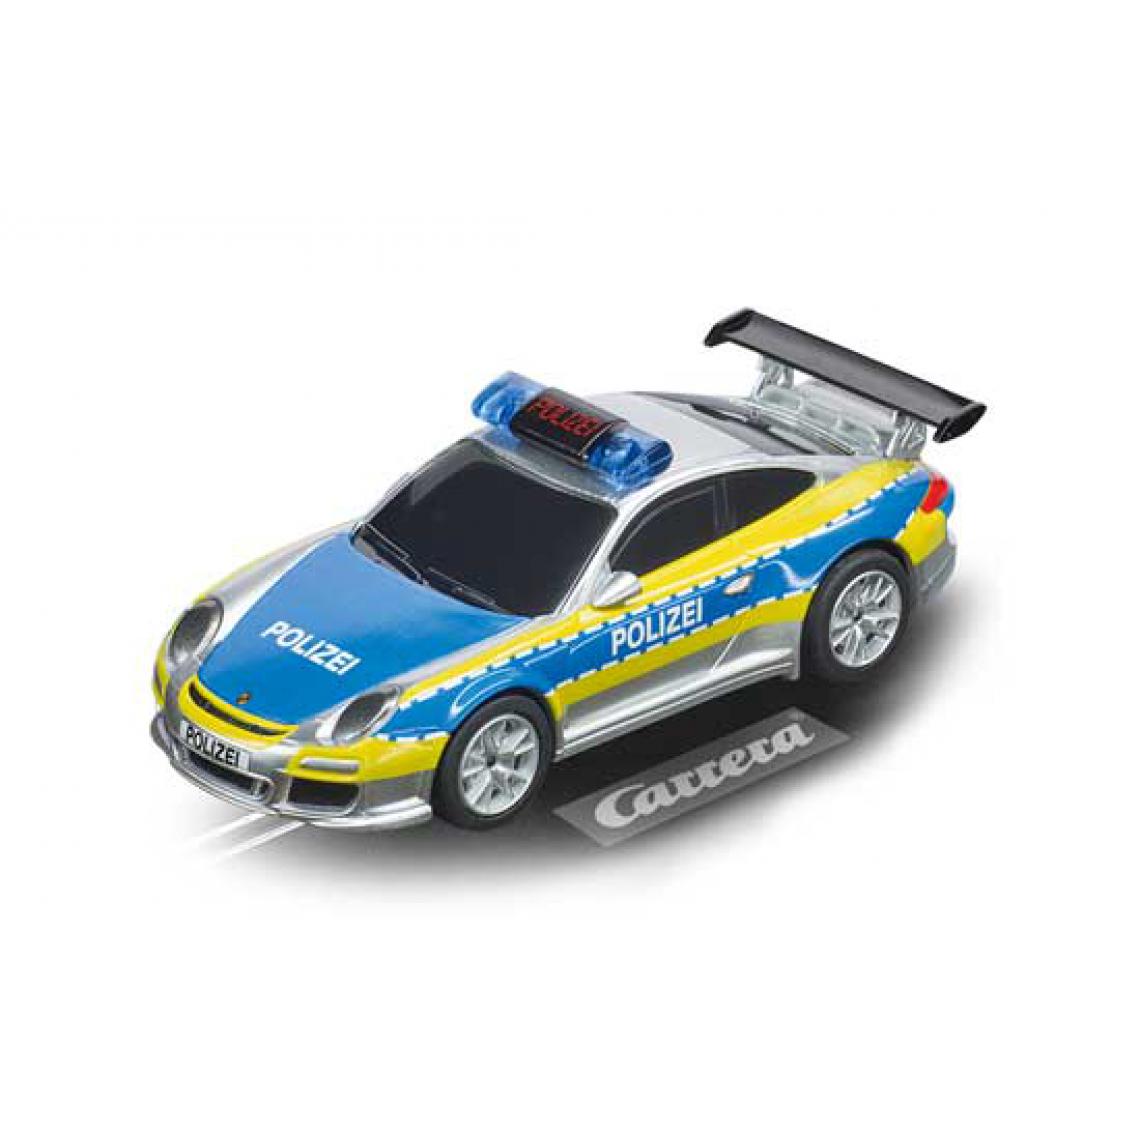 Carrera Montres - Porsche 911 Polizei - 1/43e - Carrera - Circuits